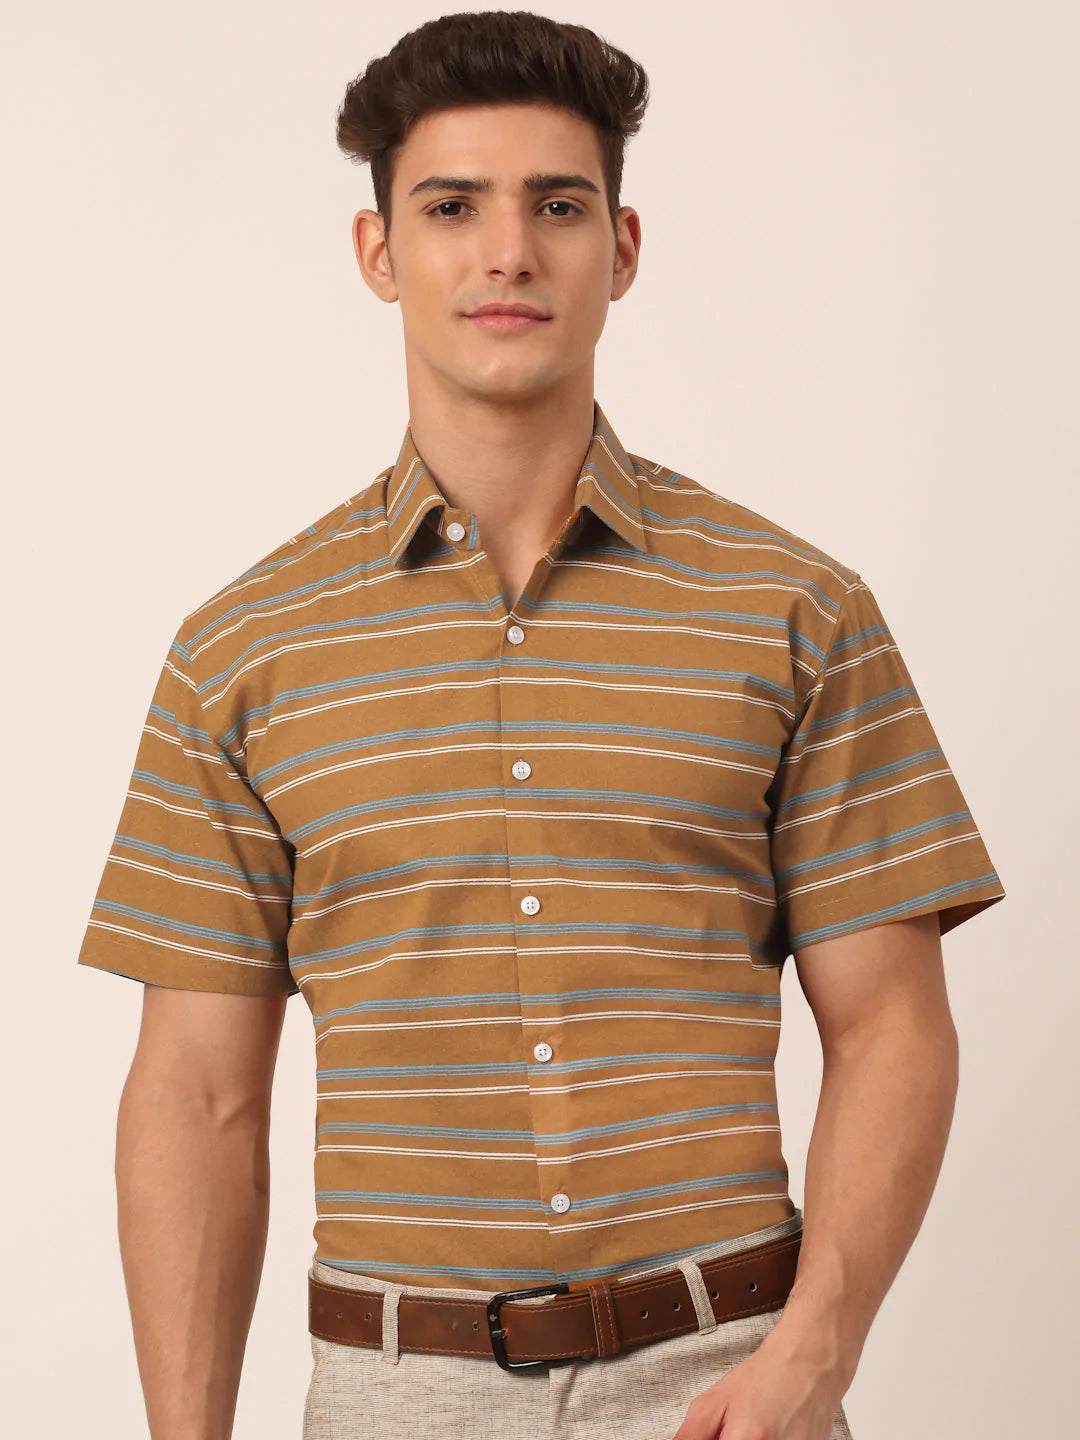 Jainish Men's Cotton Striped Half Sleeve Formal Shirts ( SF 816Mustard )